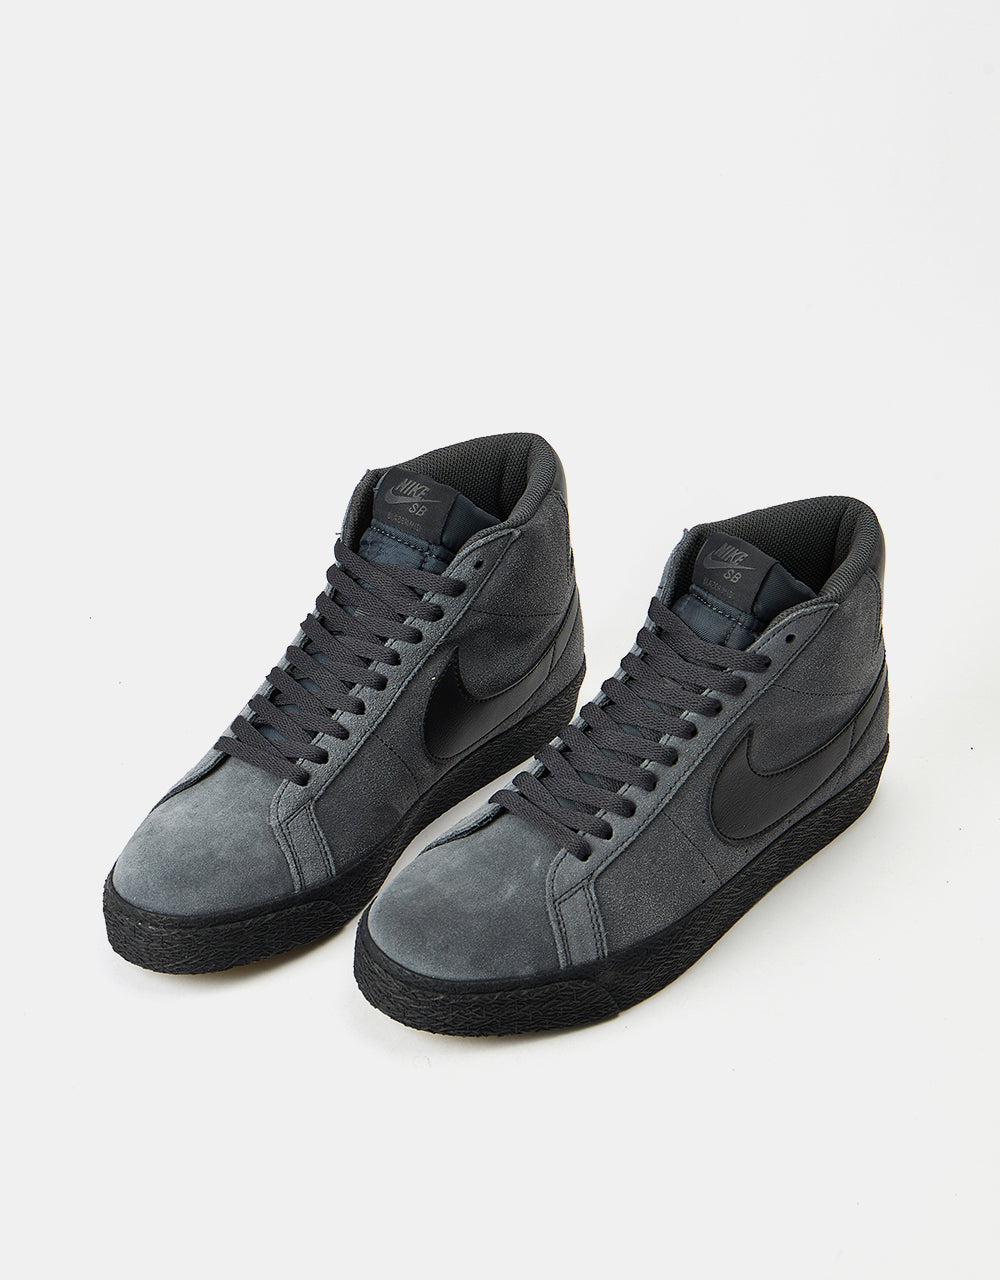 Nike SB Zoom Blazer Mid Skate Shoes - Anthracite/Black-Anthracite-Black-Gum Lt Brown